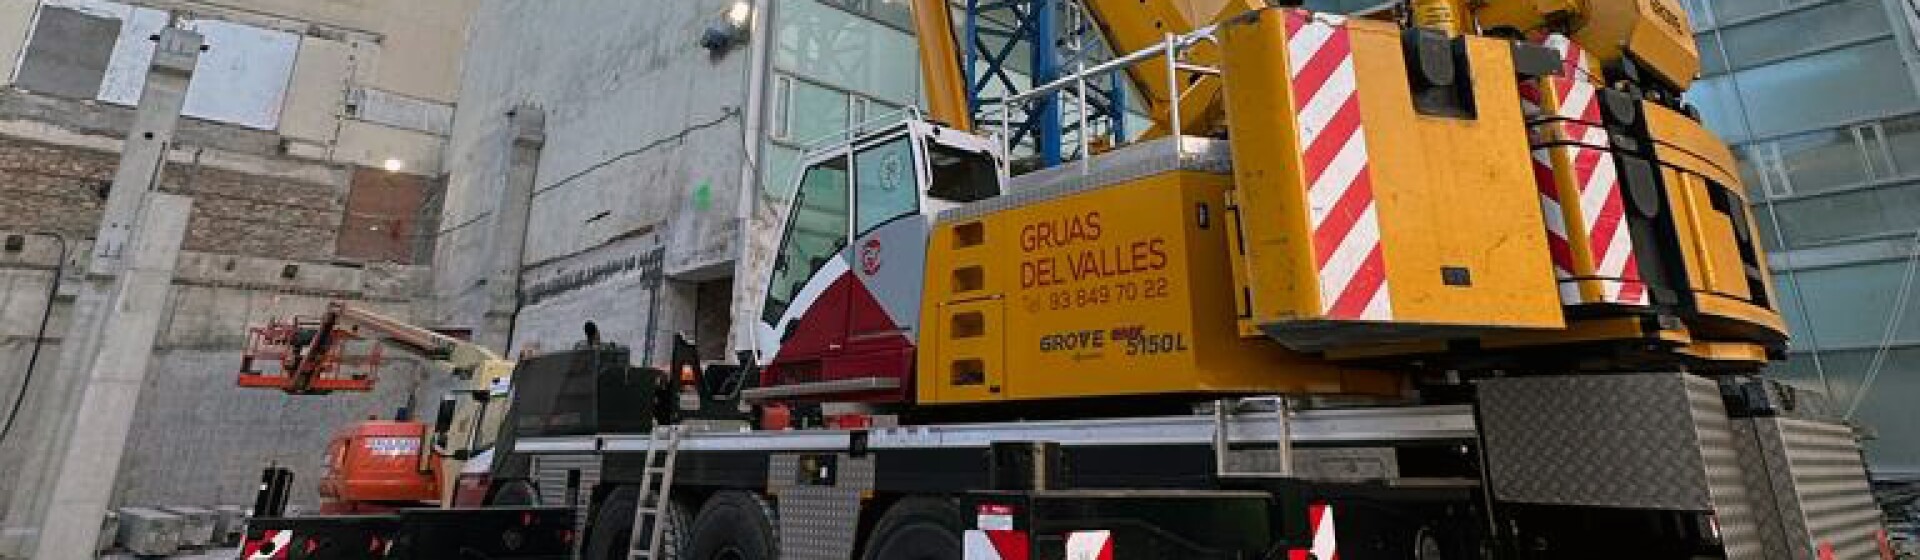 Spanish-crane-rental-company-chooses-Grove-for-local-hospital-remodeling-01.jpg